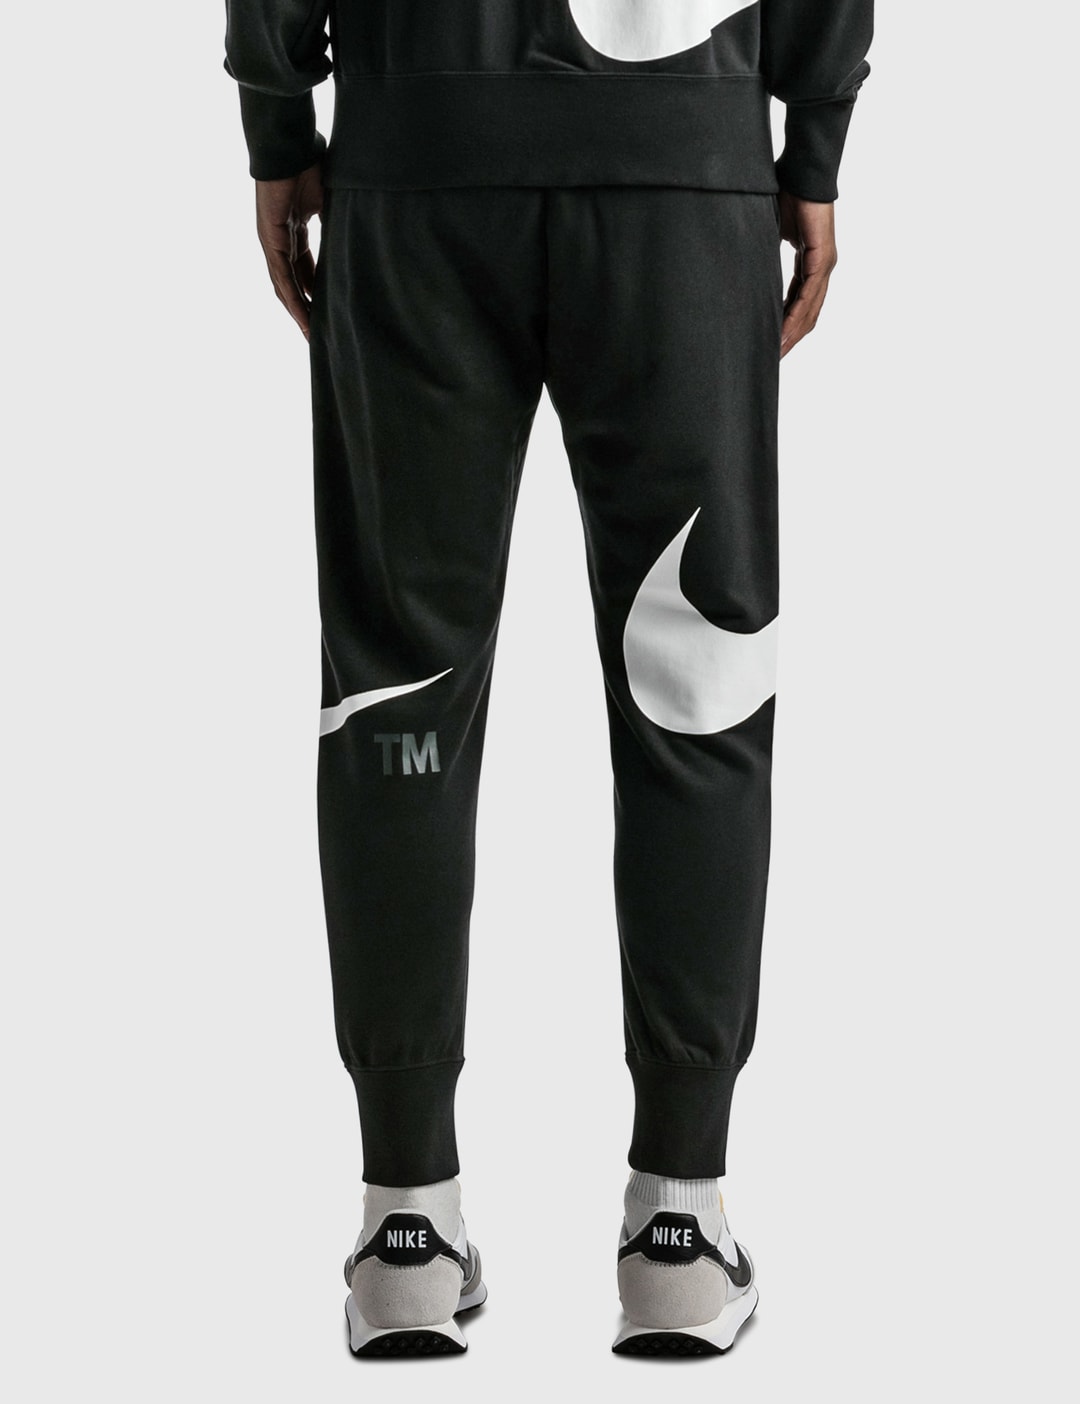 Nike - Nike Sportswear Swoosh Pants | HBX - Globally Curated Fashion ...